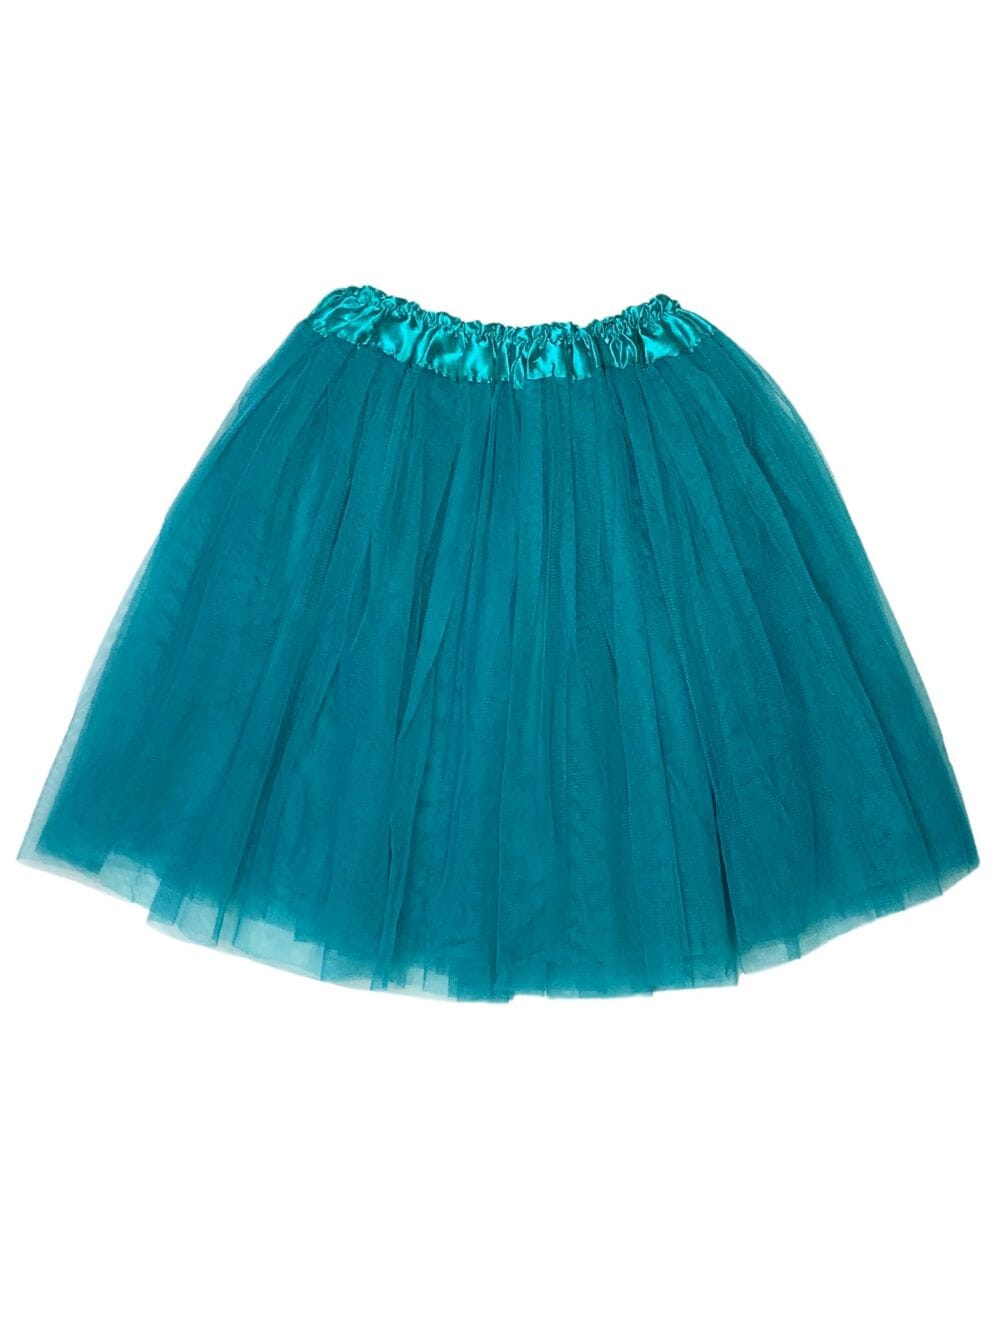 Teal Plus Size Adult Tutu Skirt - Women's Plus Size 3- Layer Basic Ballet Costume Dance Tutus - Sydney So Sweet